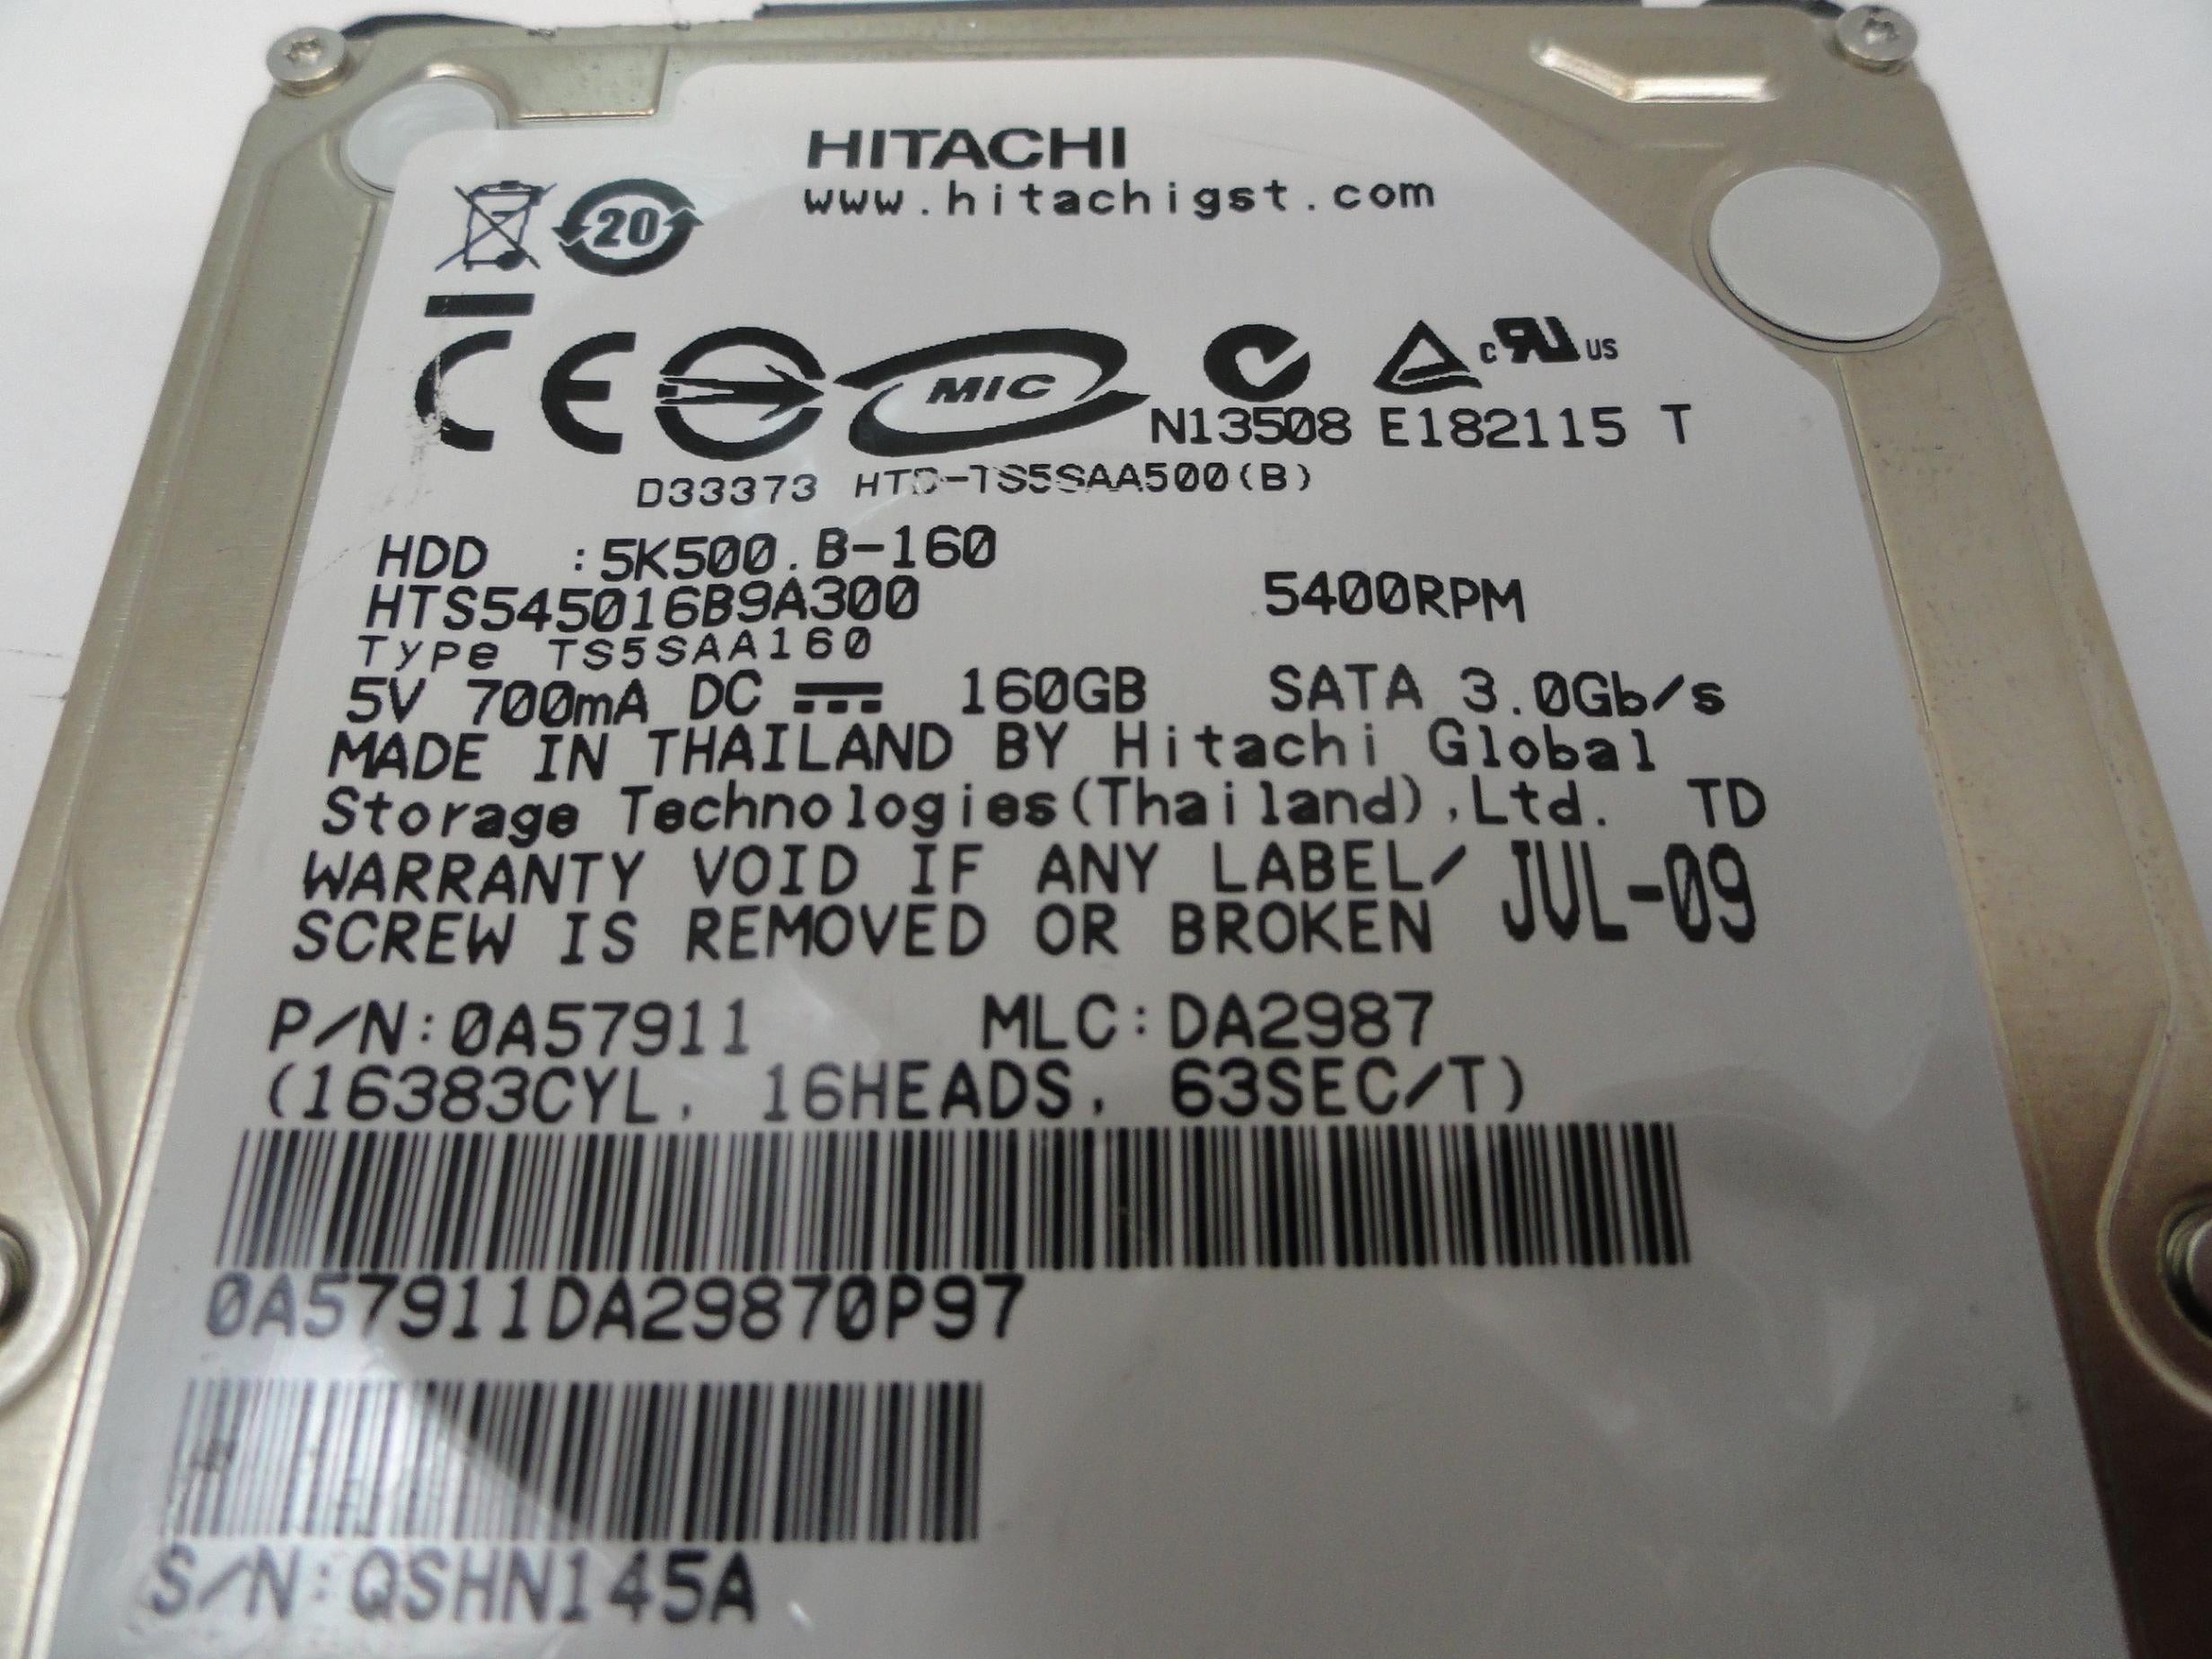 0A57911 - Hitachi 160GB SATA 5400rpm 2.5in HDD - USED